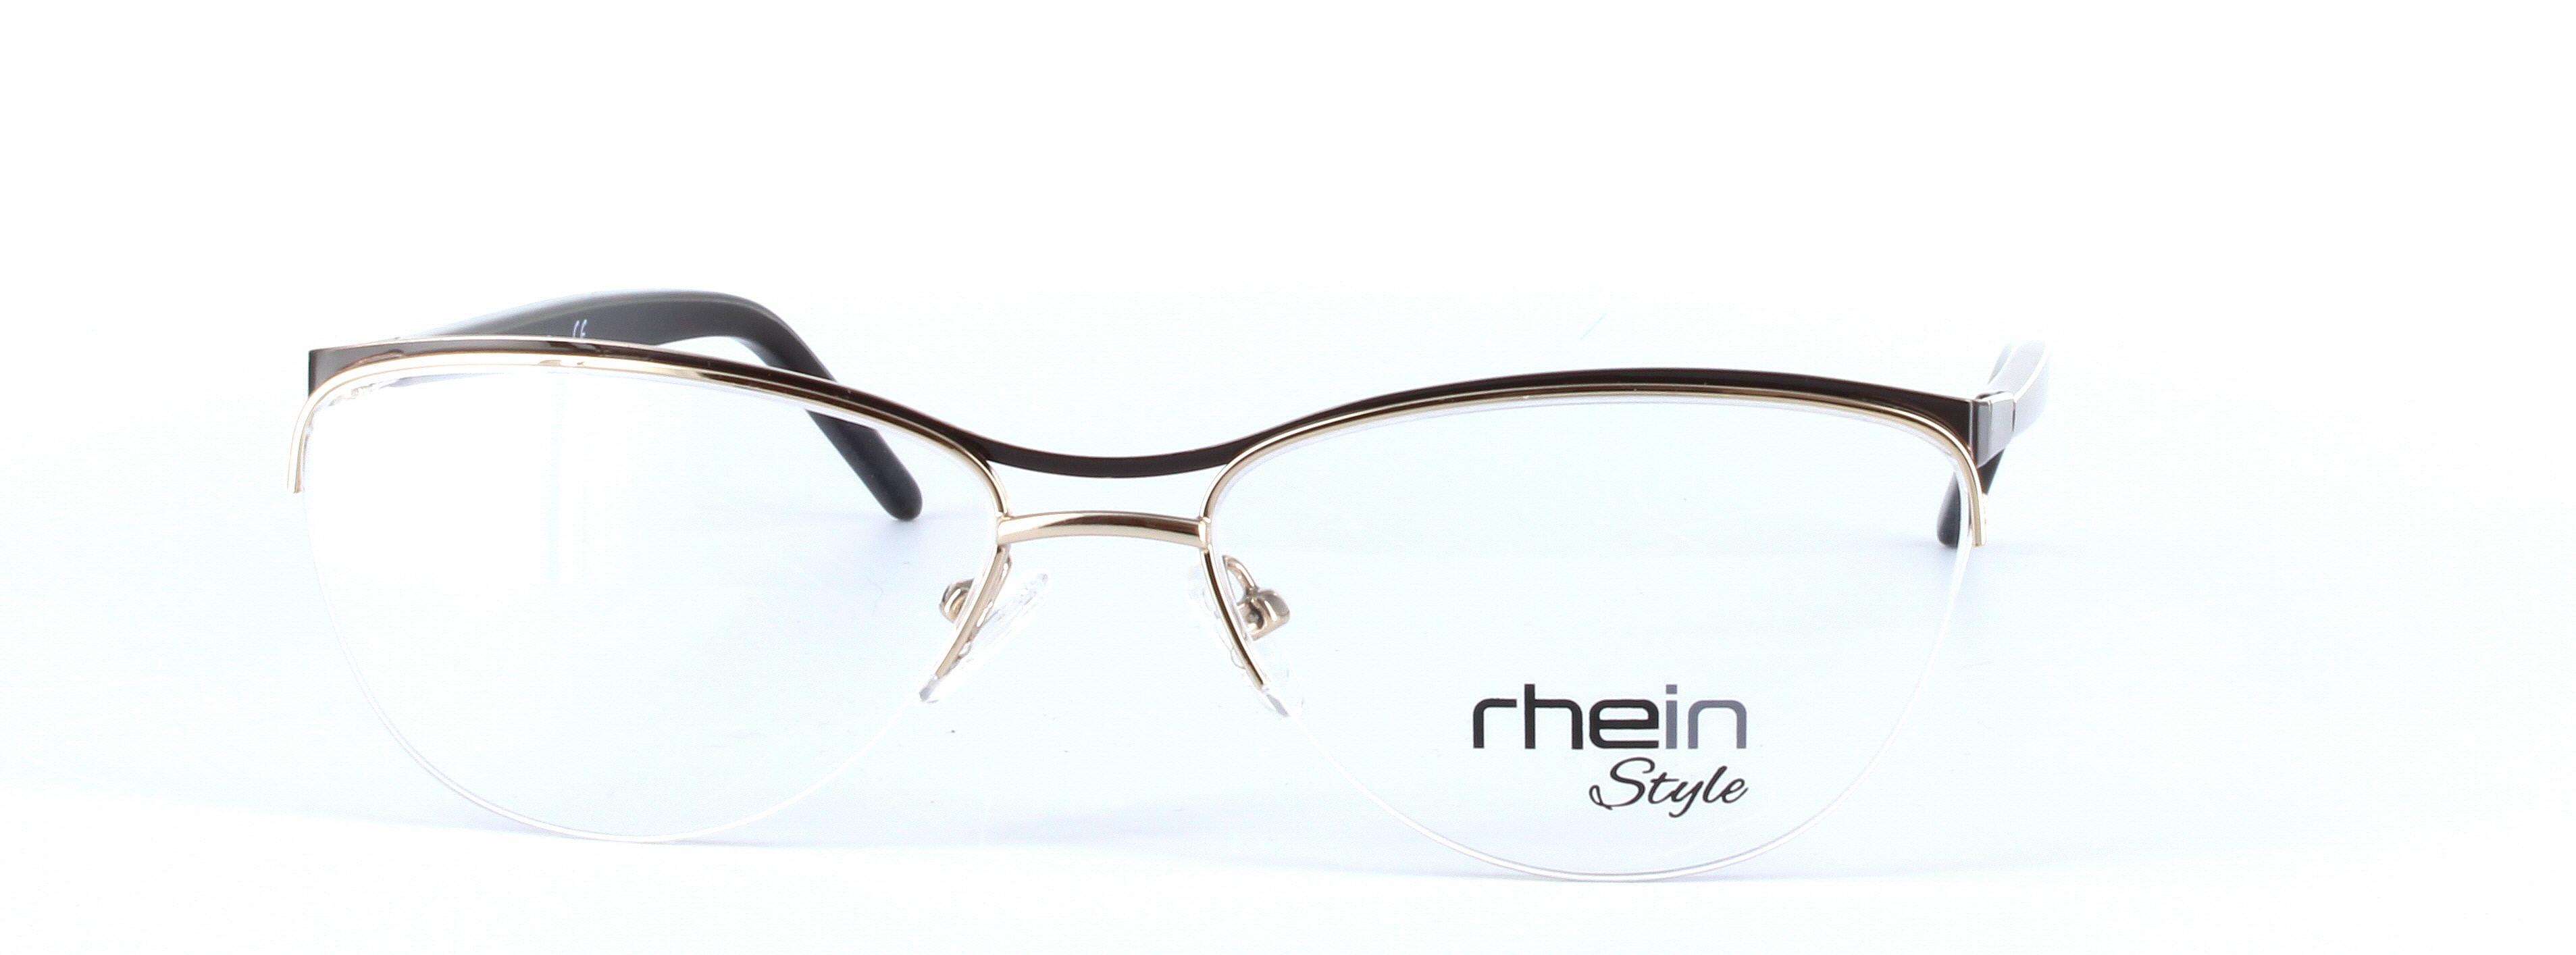 Agora Black Semi Rimless Oval Metal Glasses - Image View 5